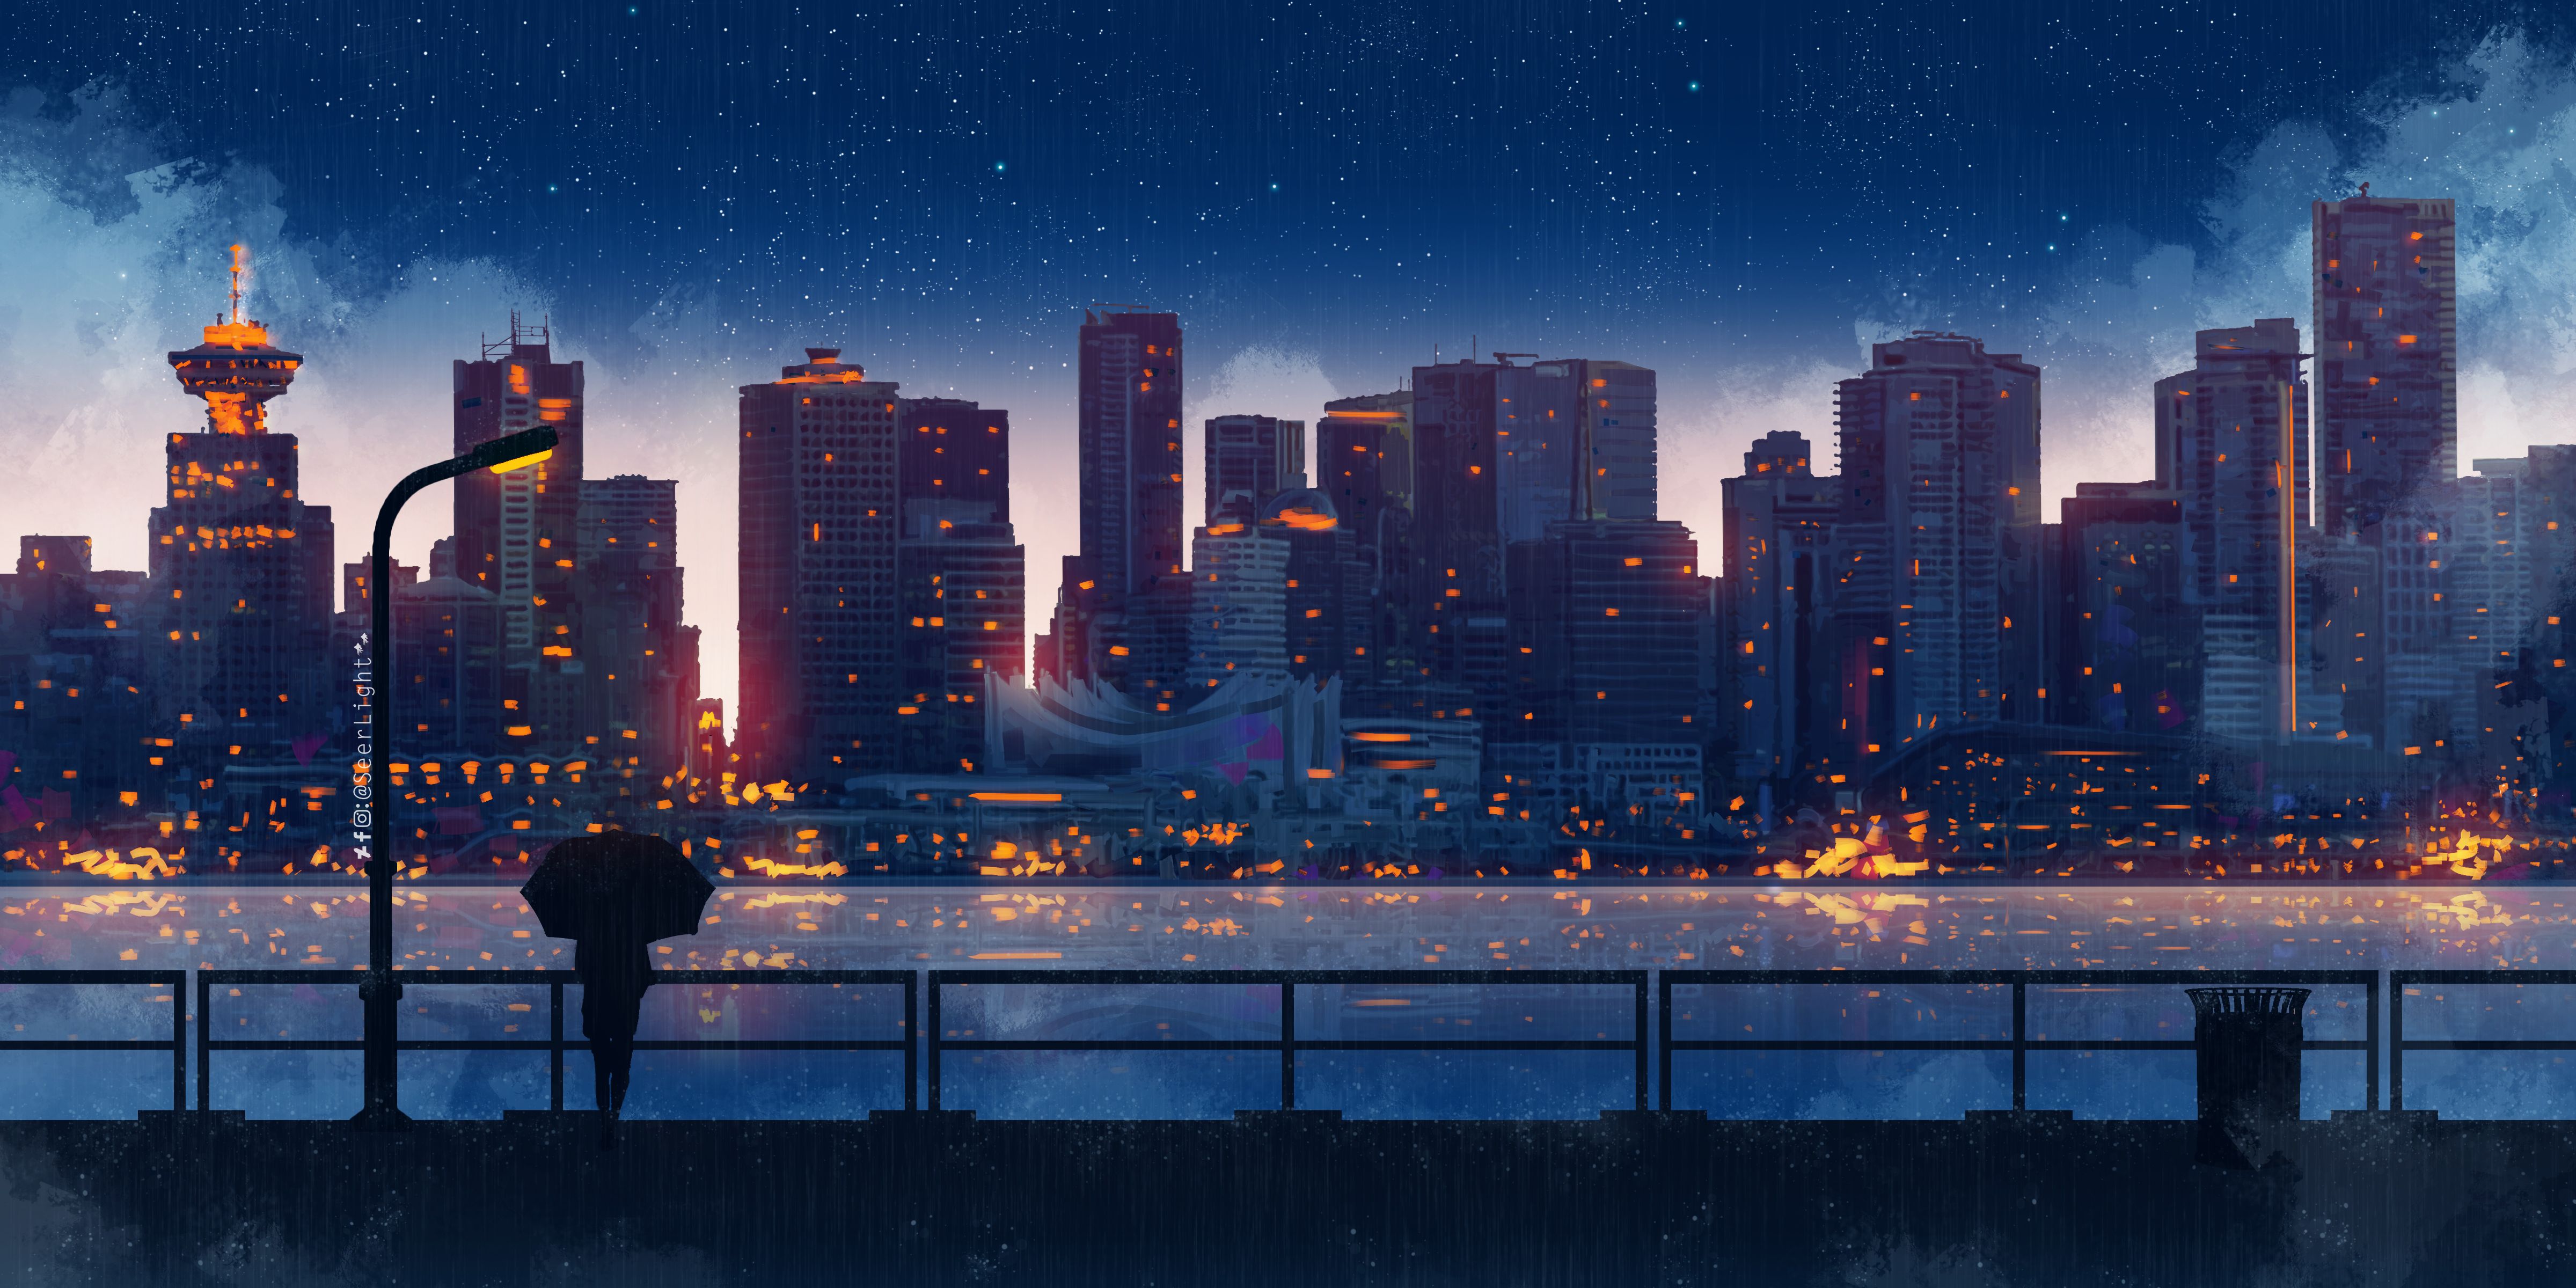 Wallpaper Japanese anime city / download to desktop (70+)